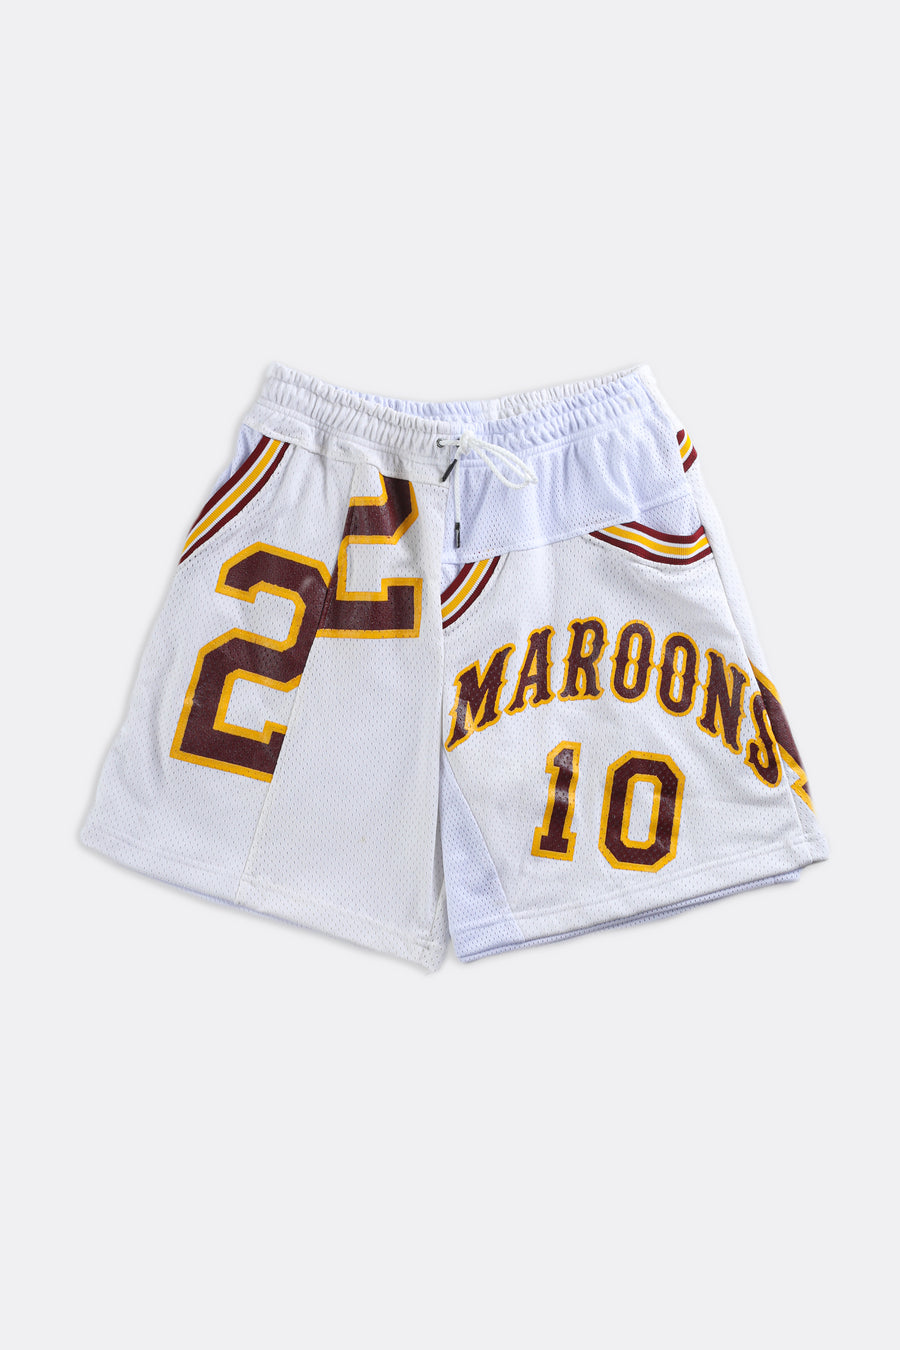 Unisex Rework Maroons Jersey Shorts - Women-M, Men-S